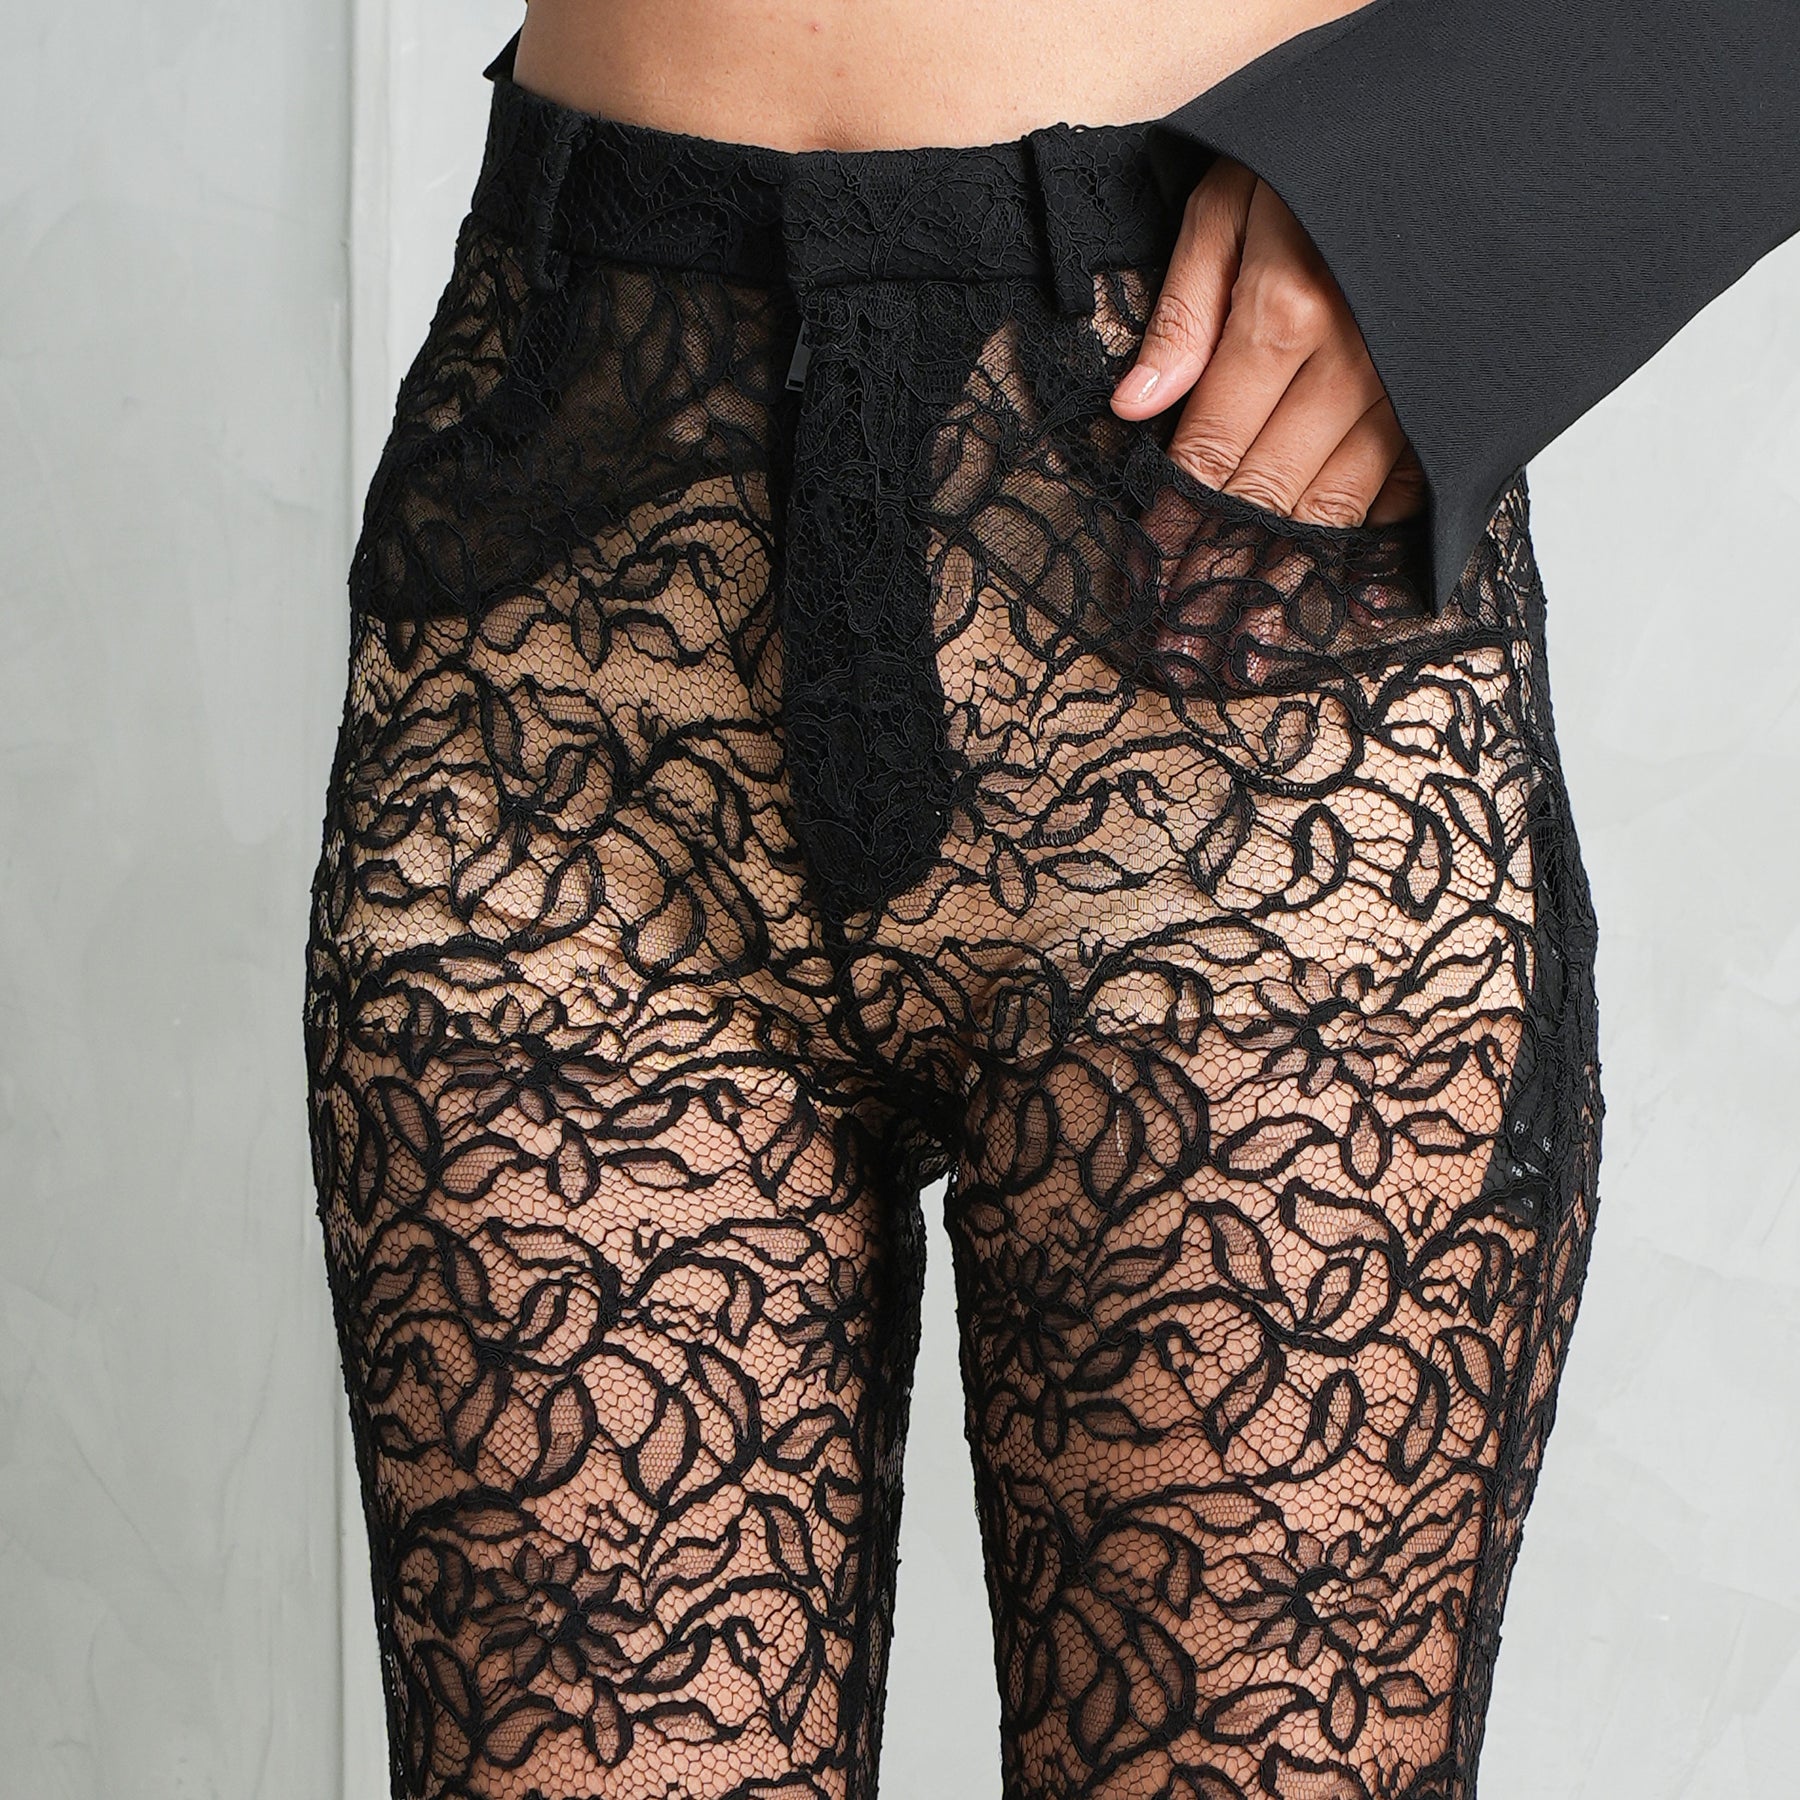 Simmi floral lace leggings in black - part of a set | ASOS